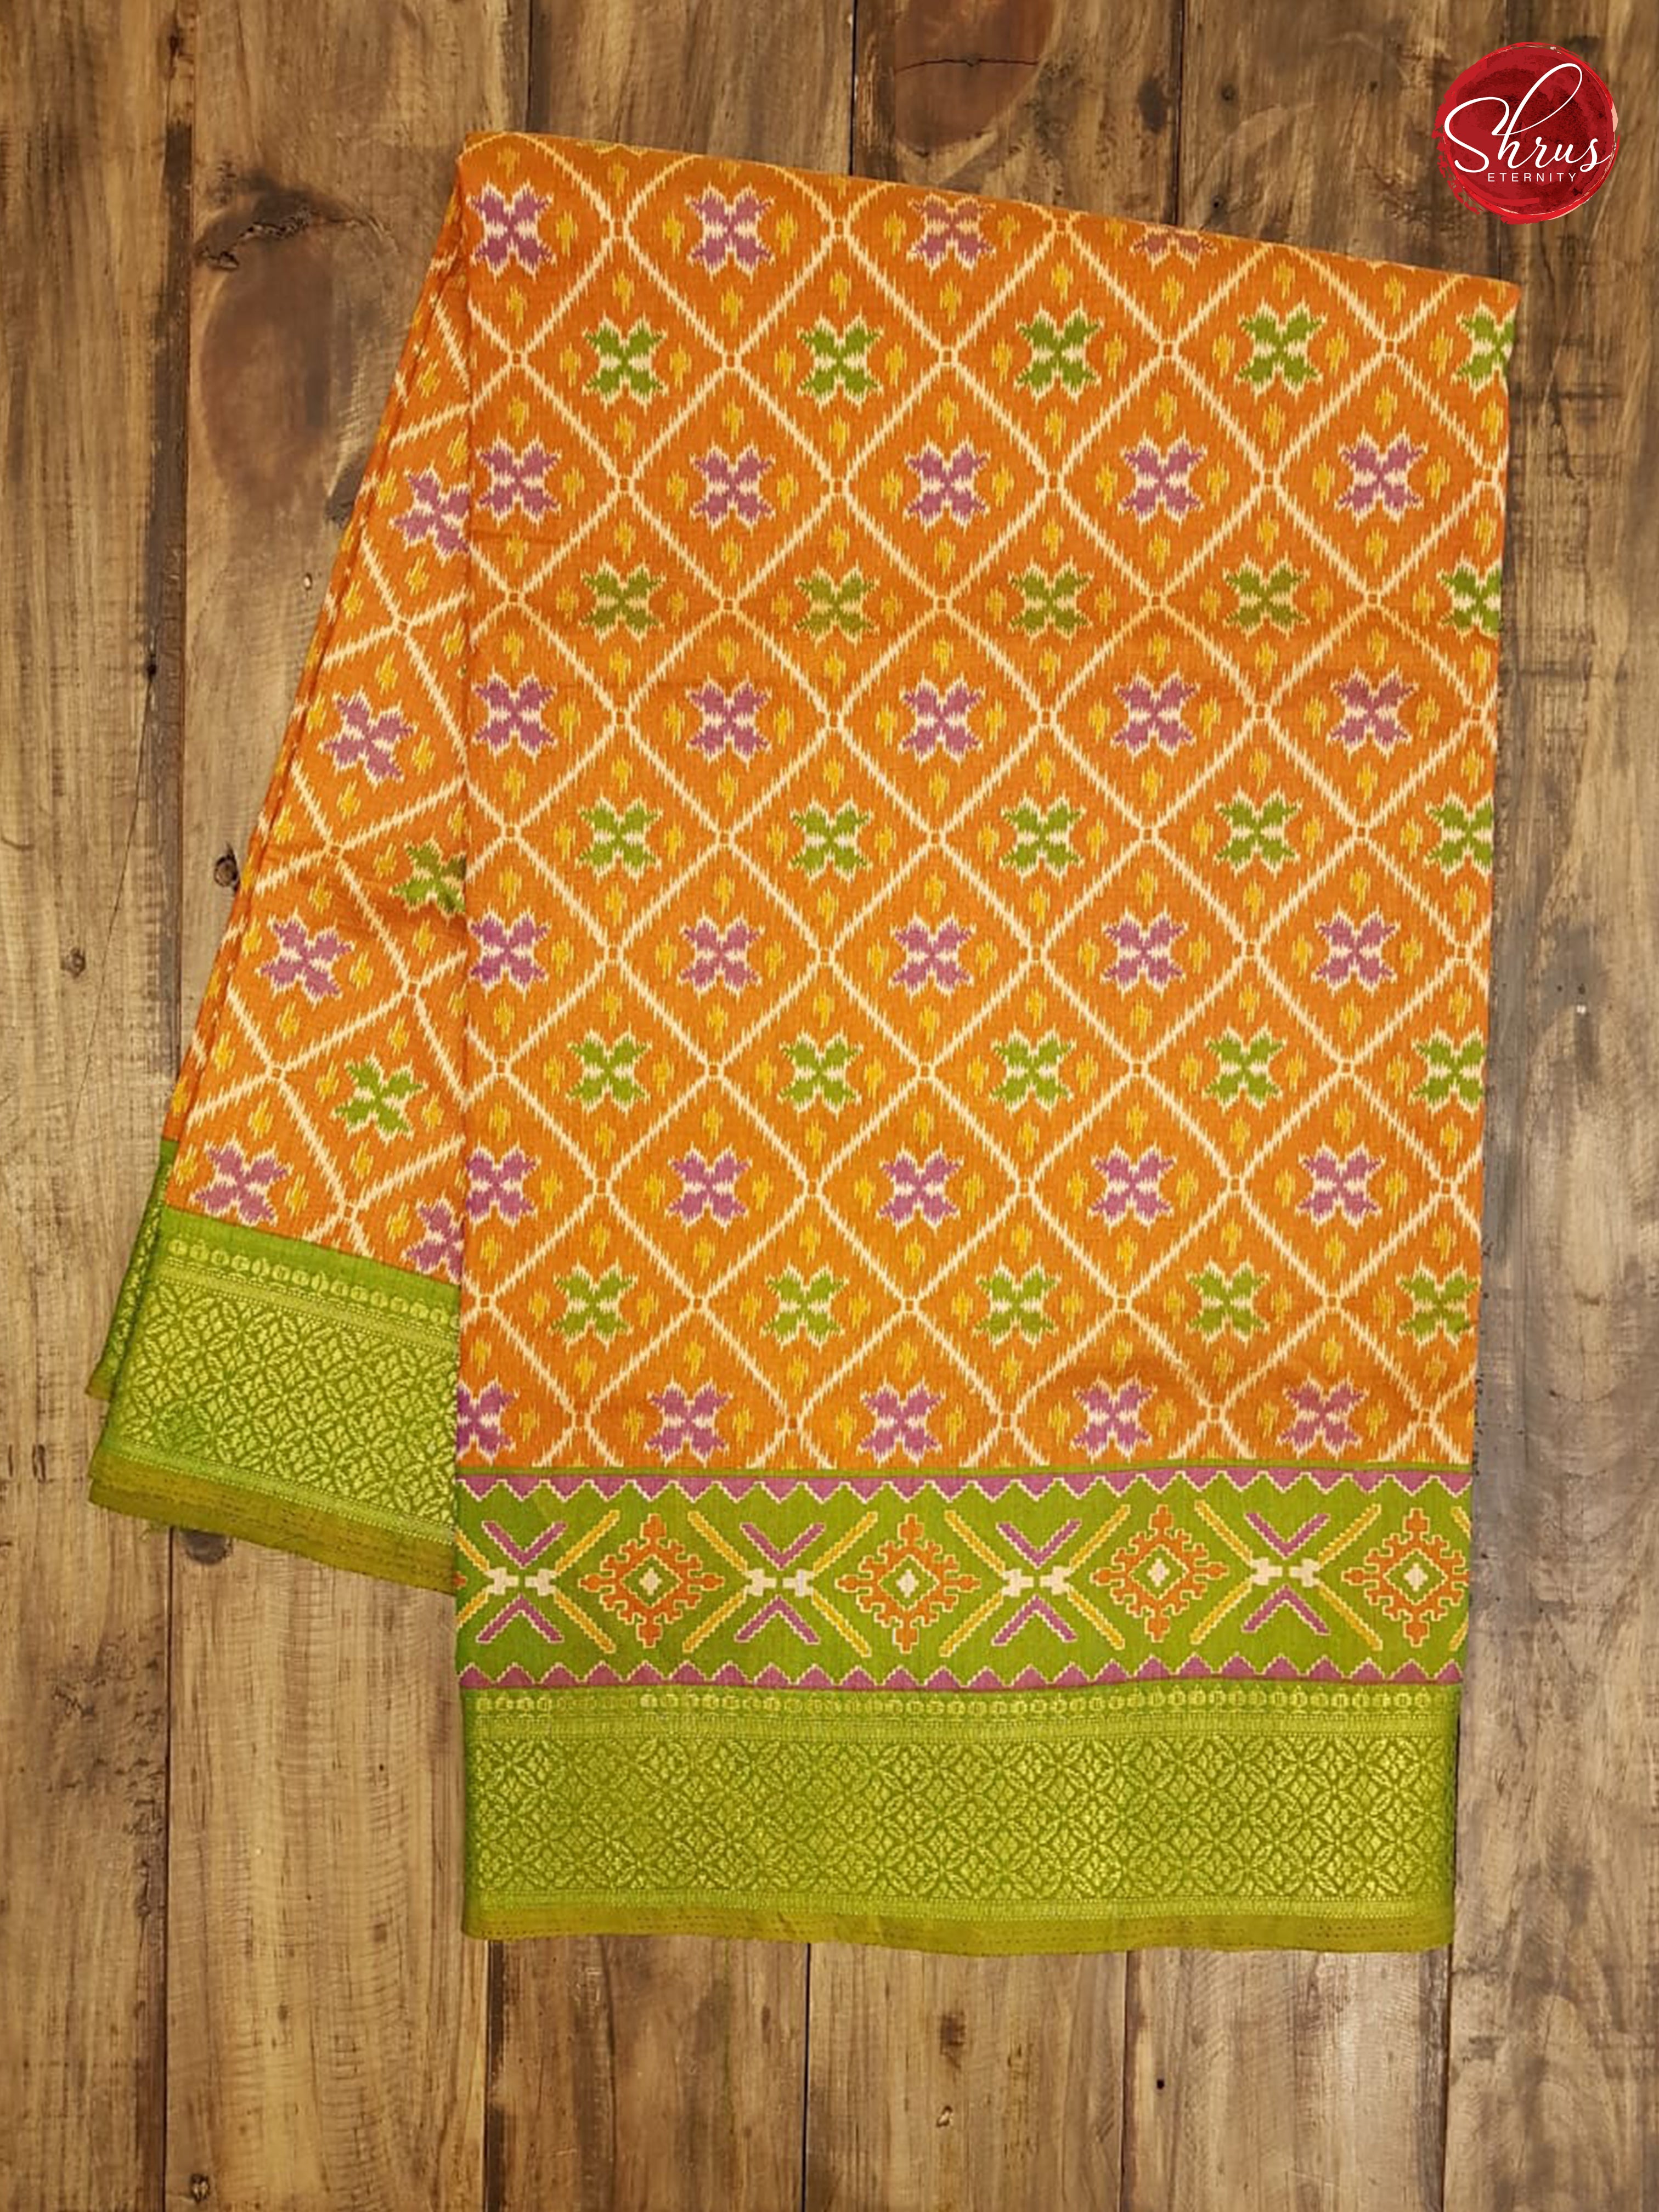 Orange & Green - Semi Patola - Shop on ShrusEternity.com